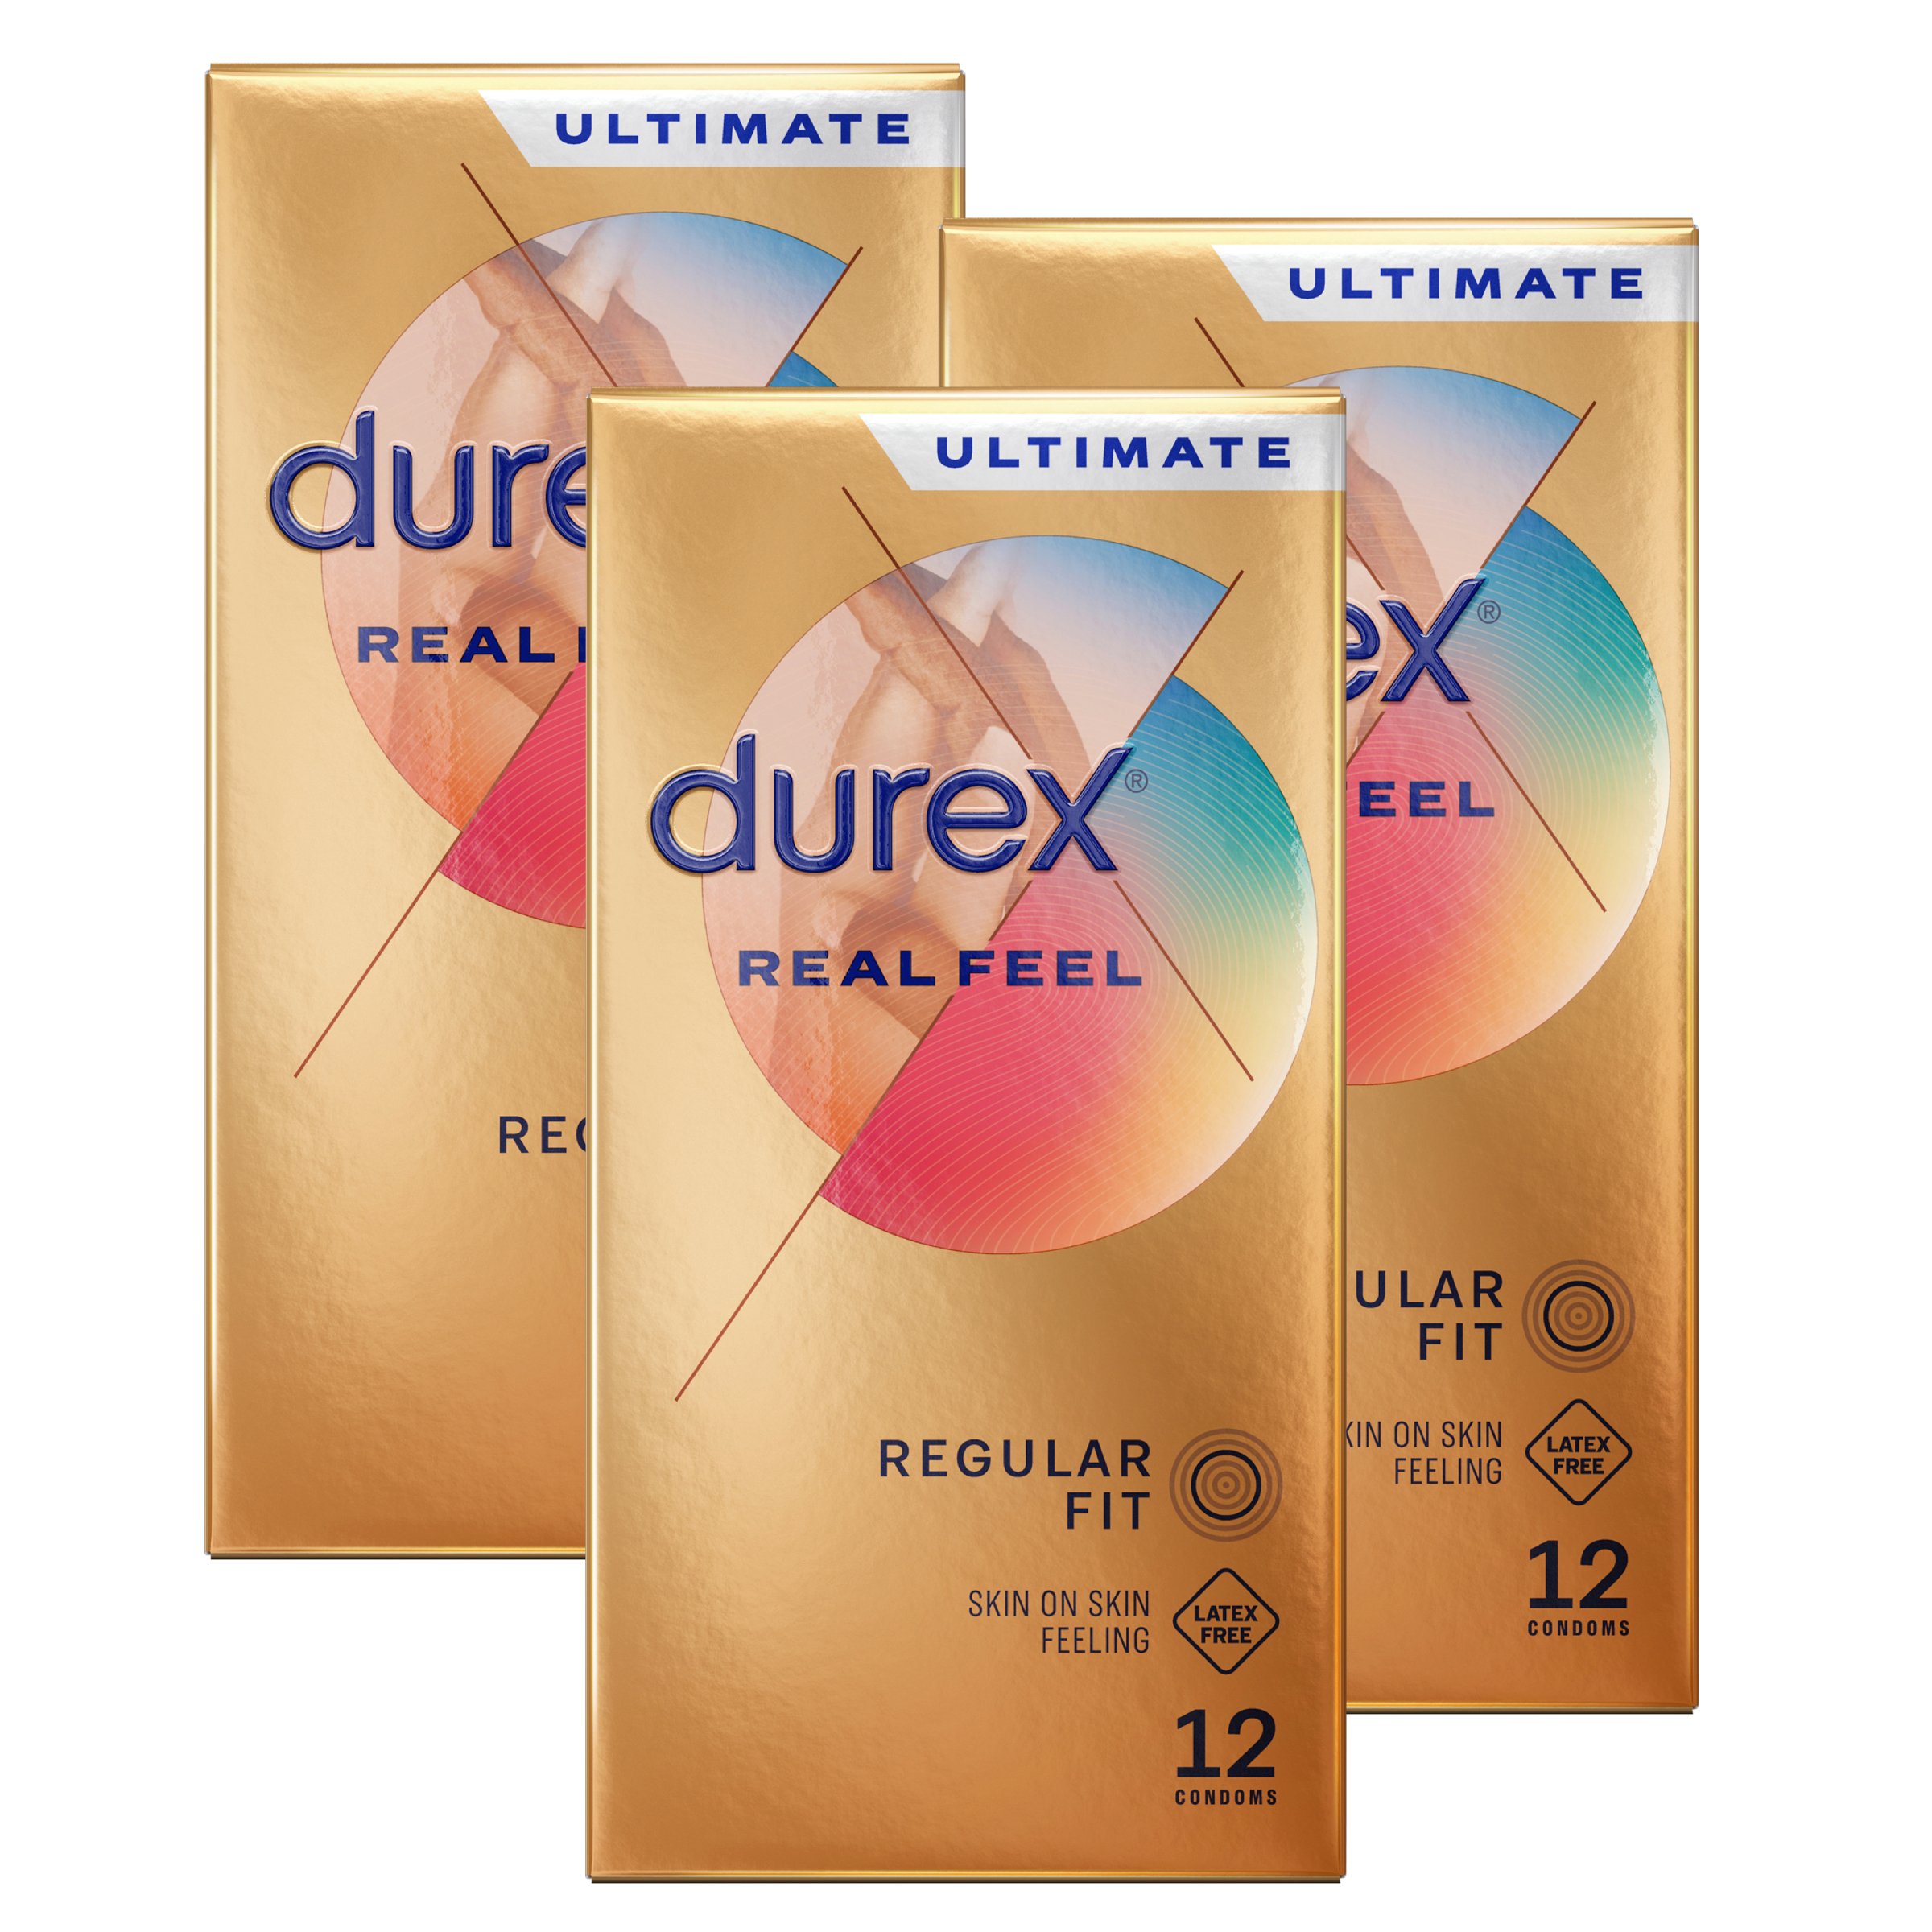 Durex Real Feel - 12 Condoms - 3 Pack